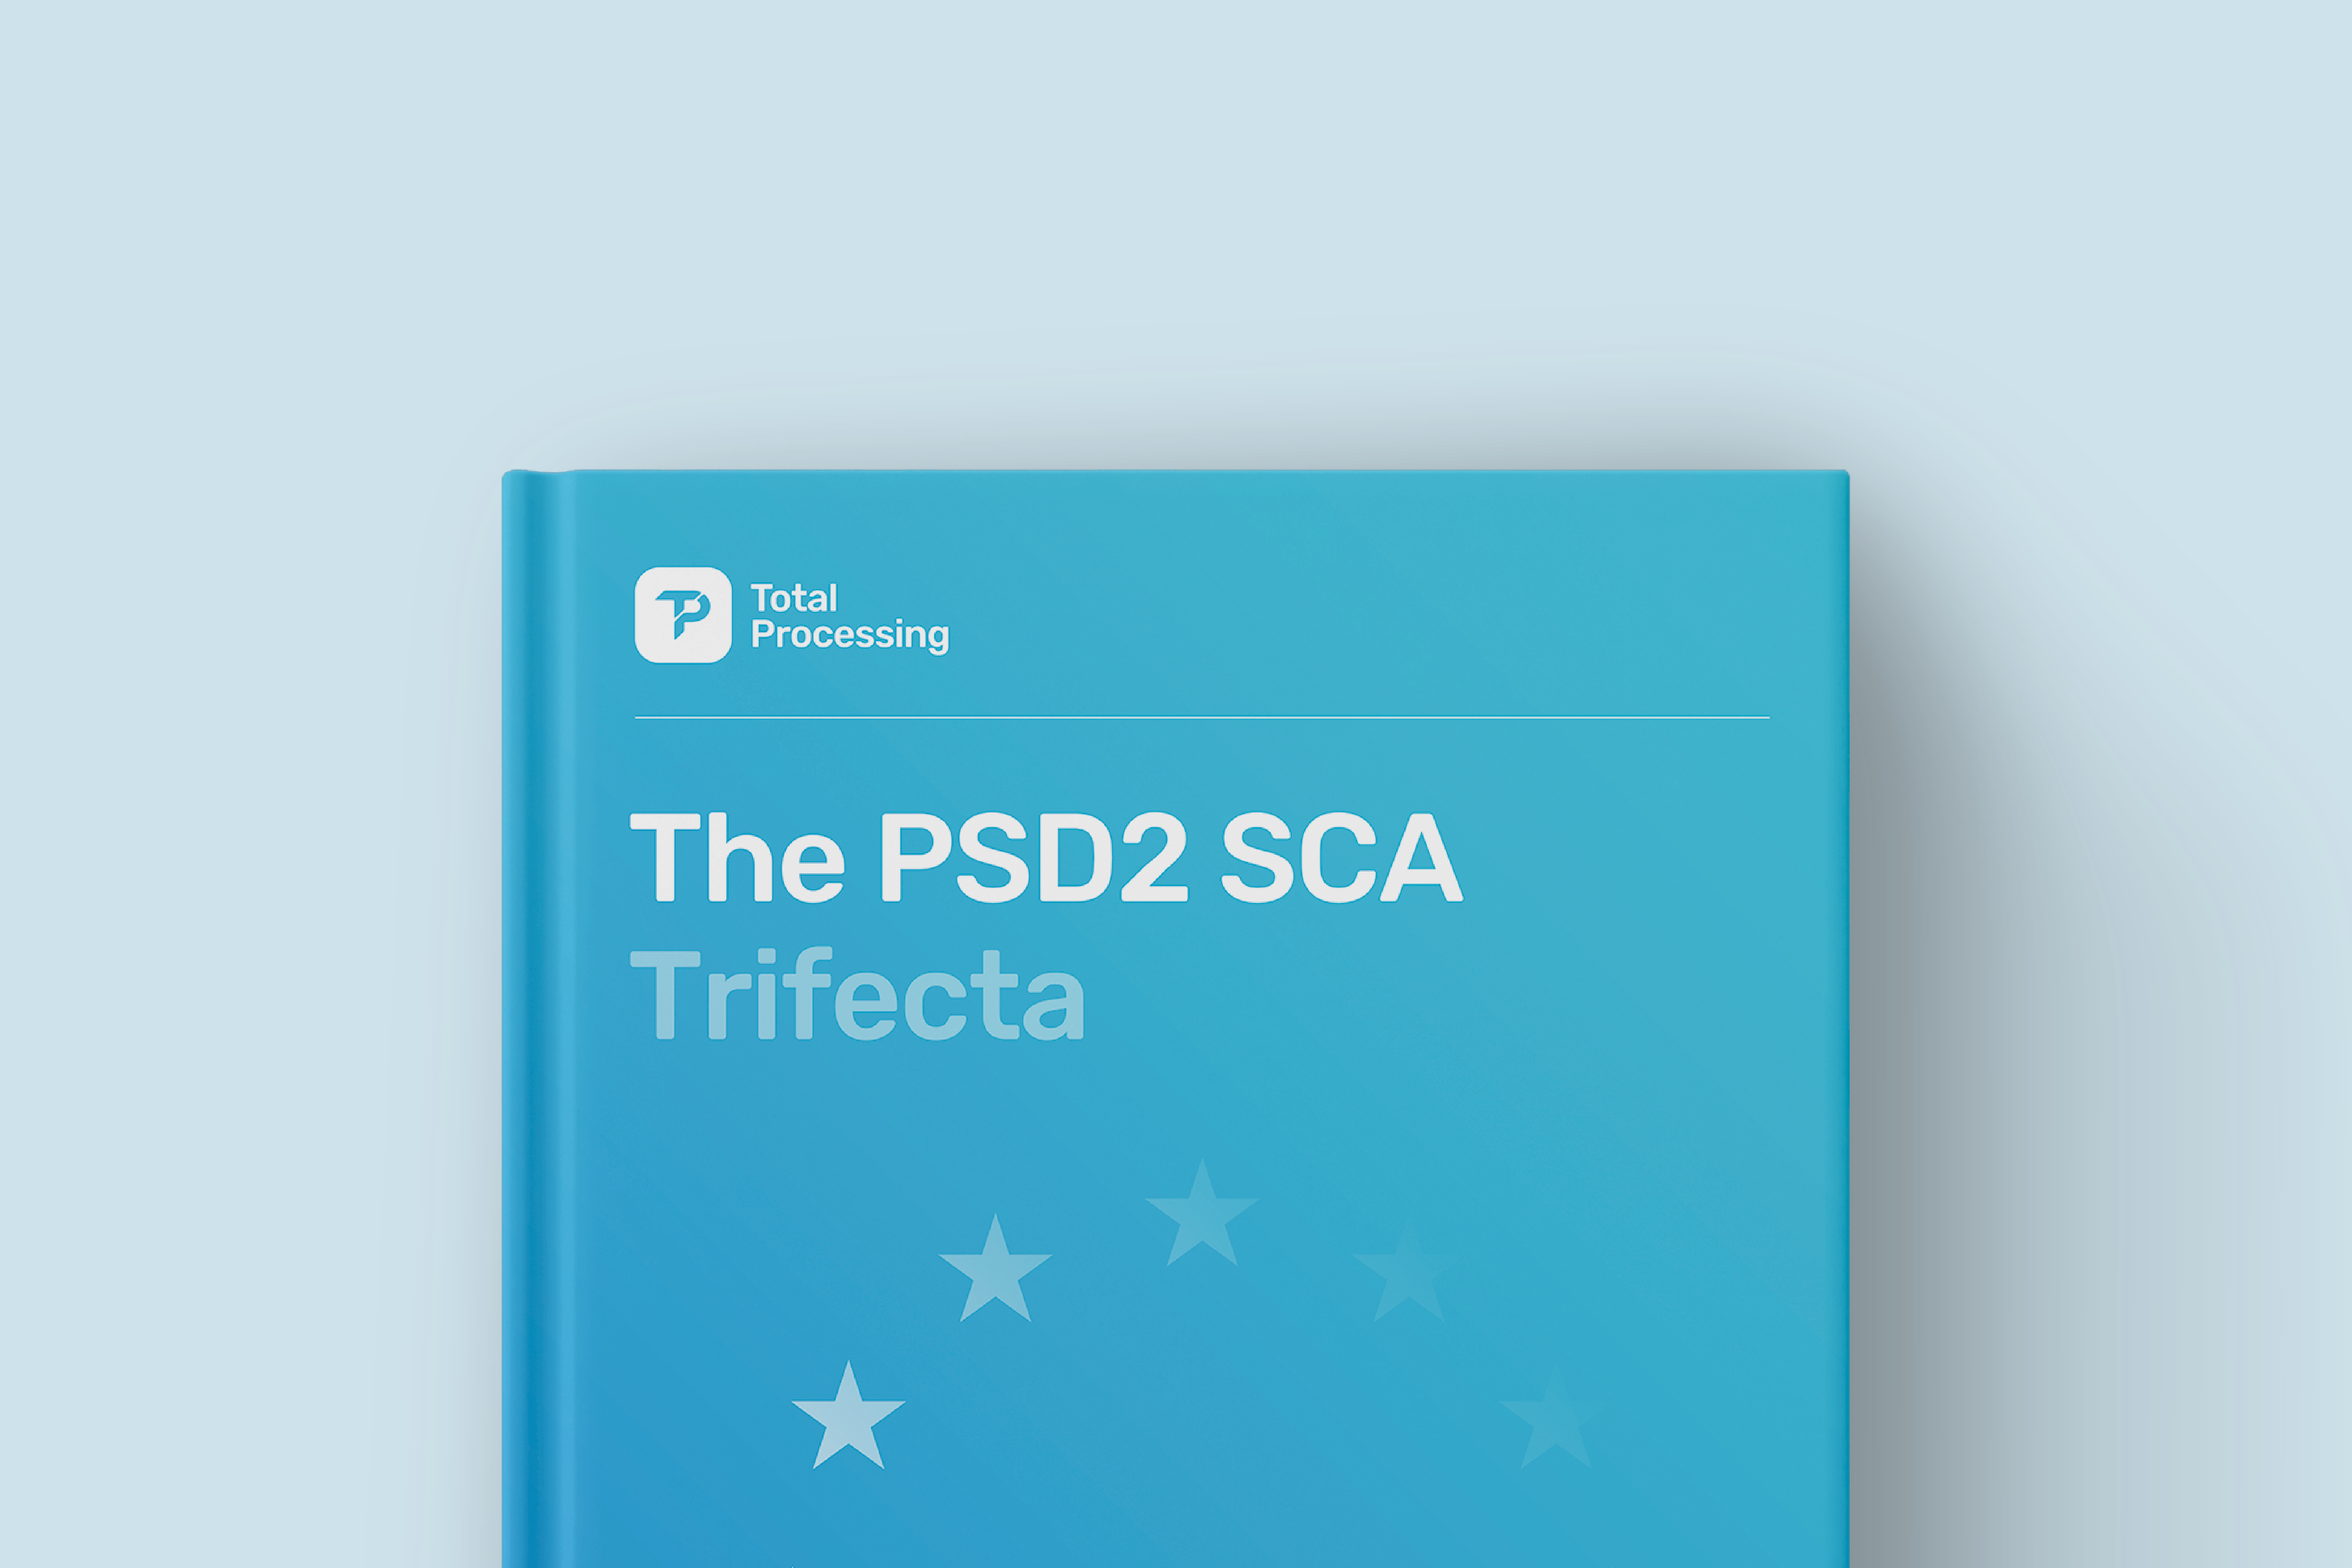 The PSD2 SCA Trifecta